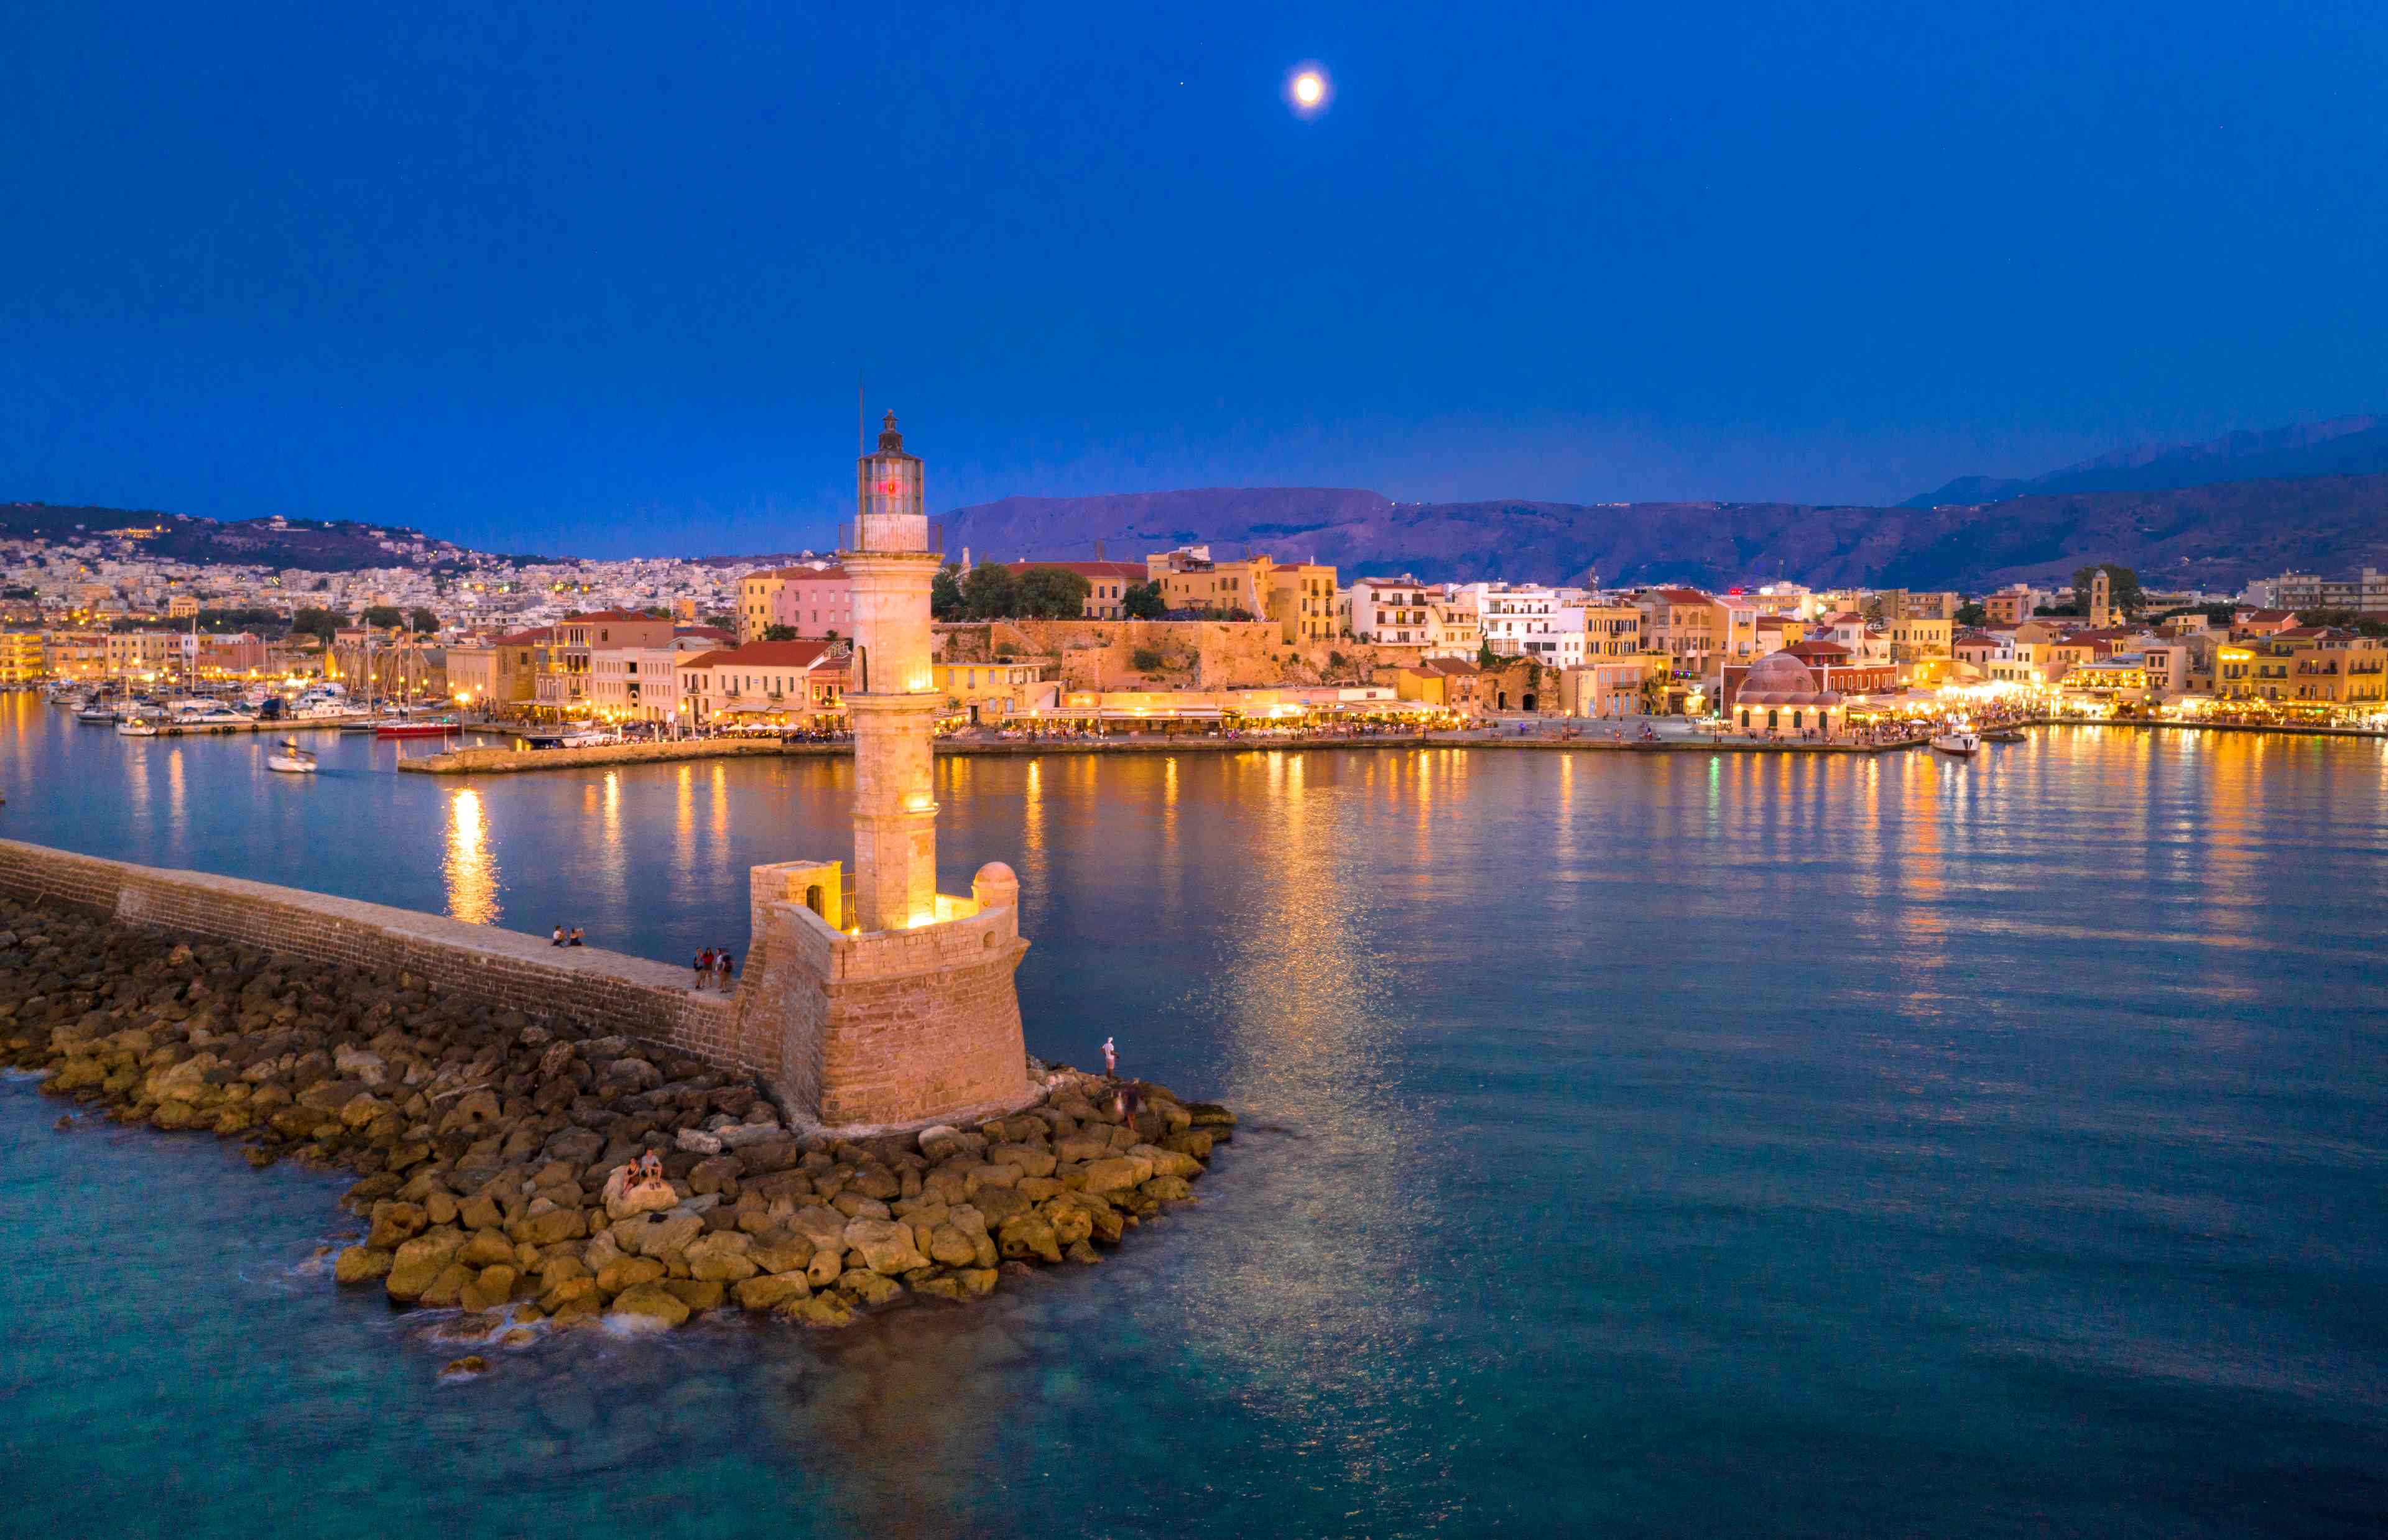 Chania Harbour, Georgios Tsichlis/Shutterstock